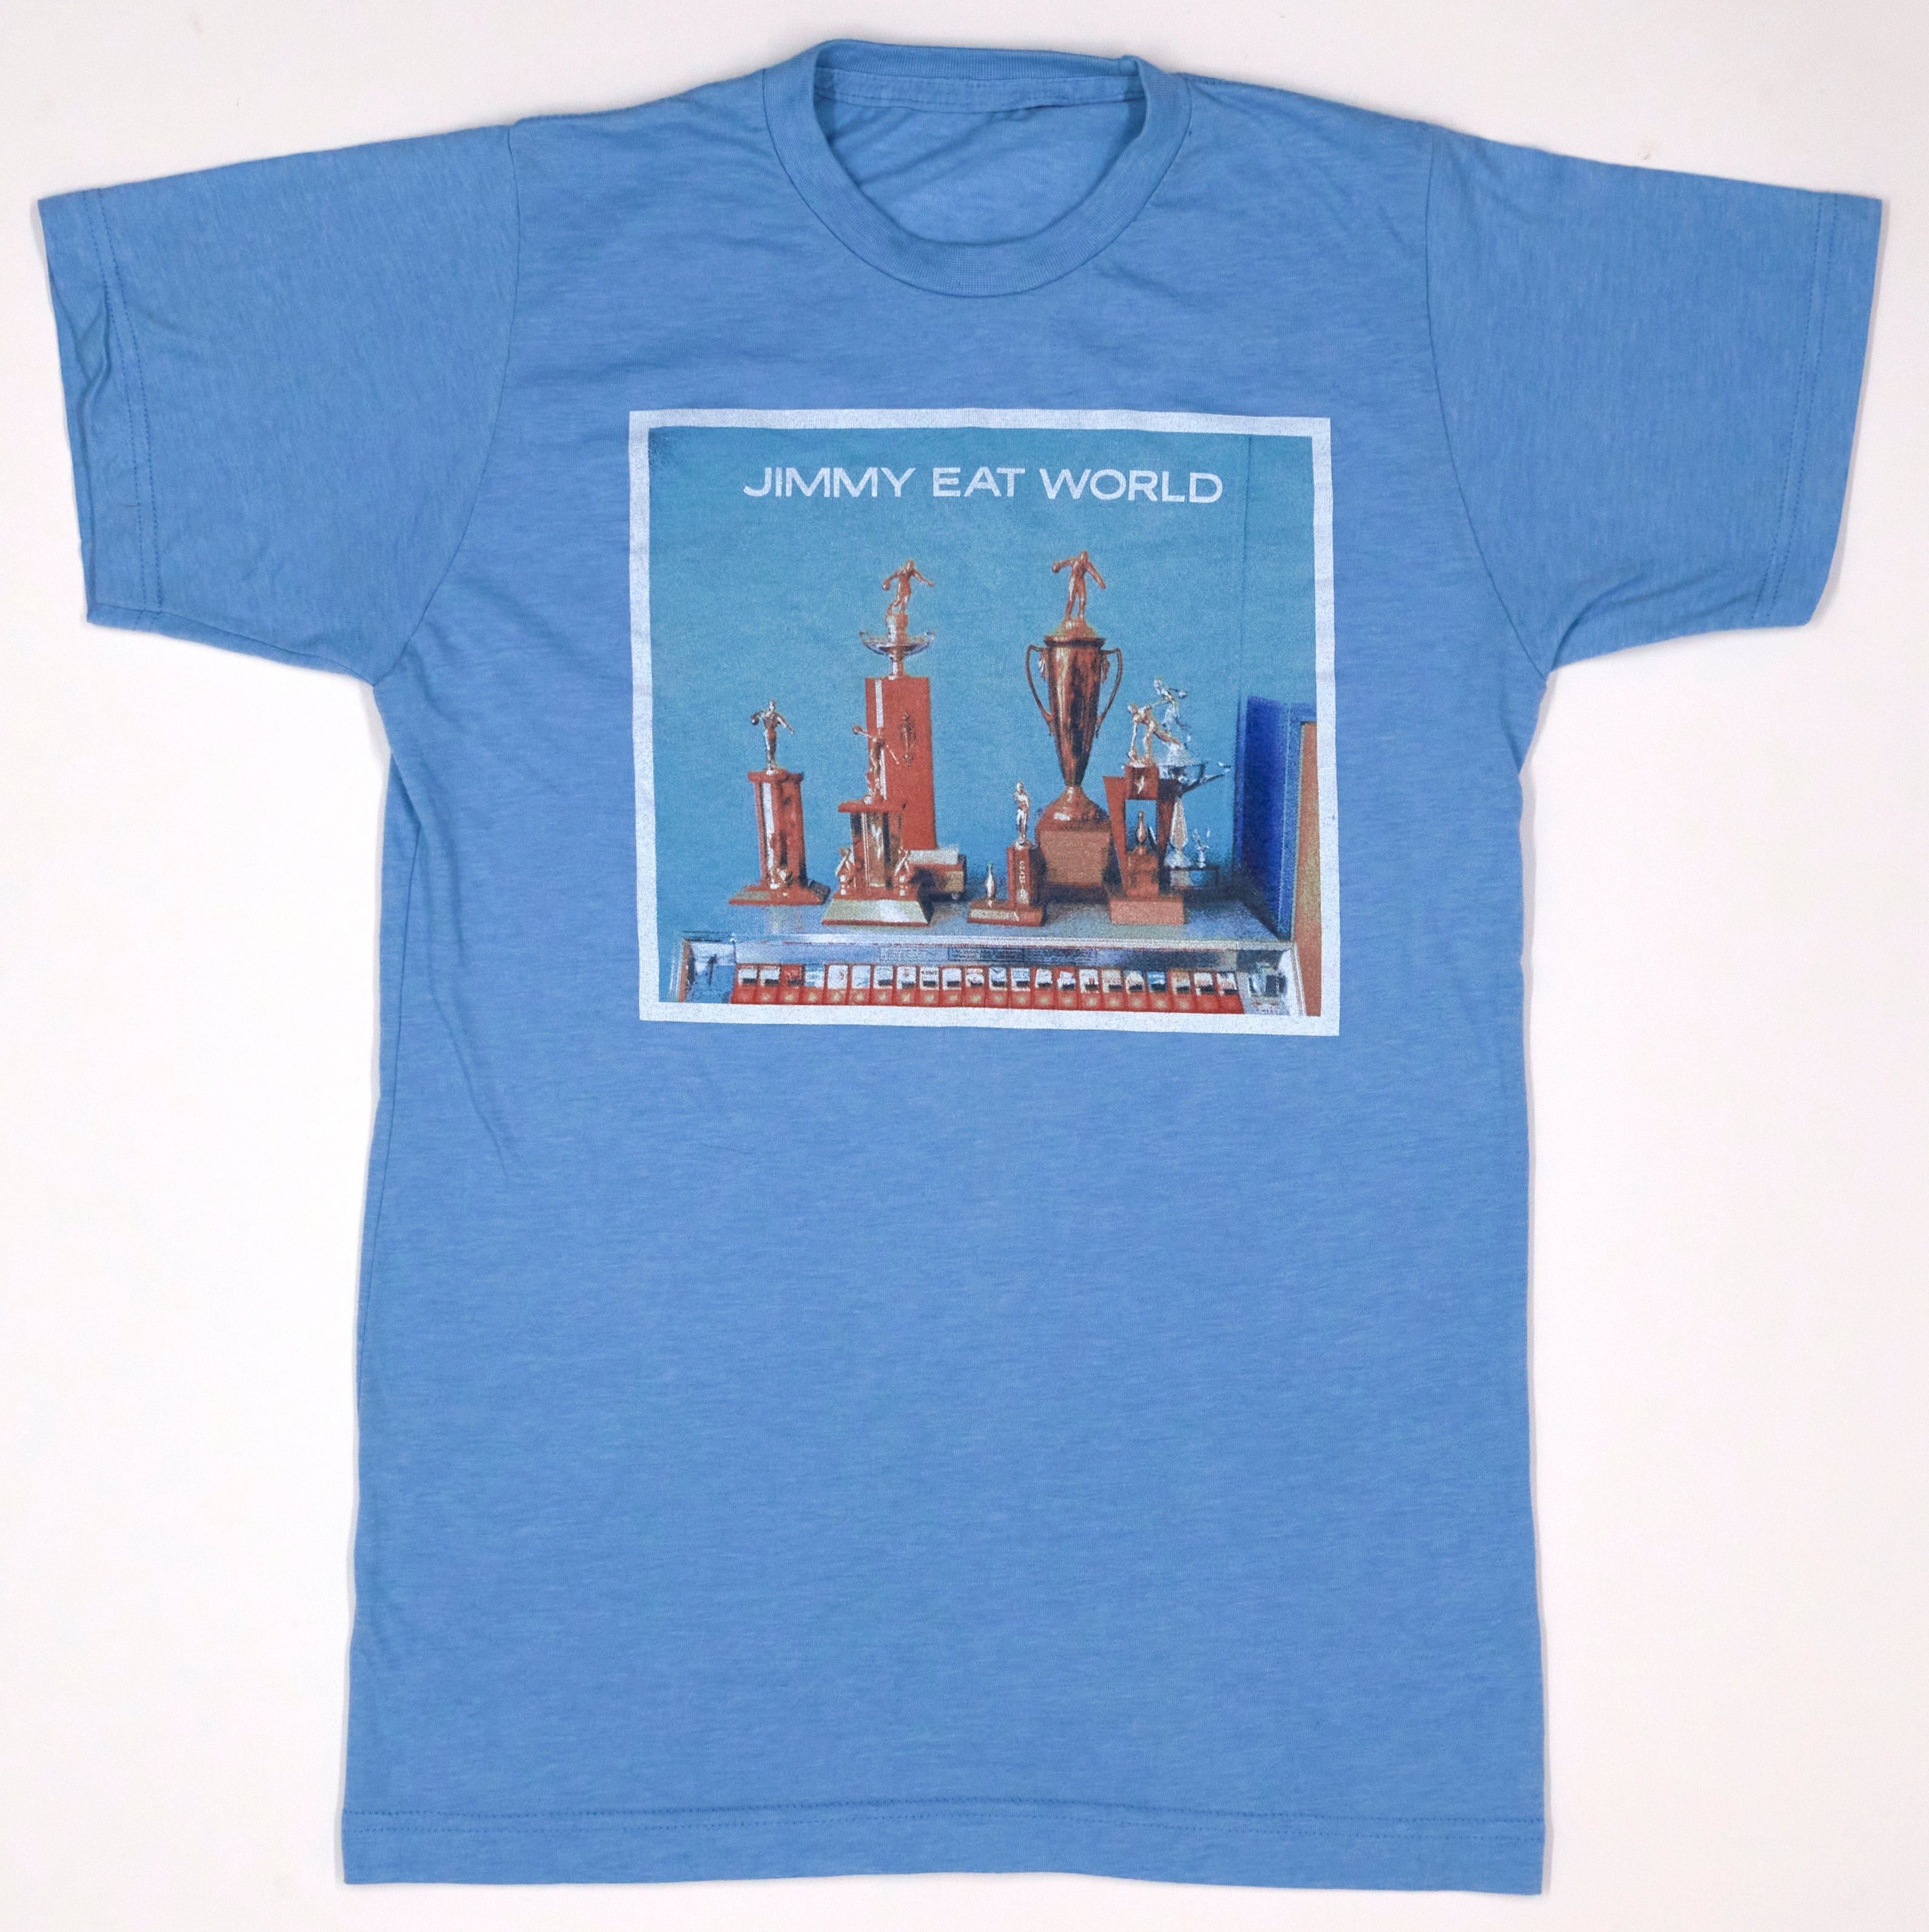 Jimmy Eat World - Bleed American Tour Shirt Size Small